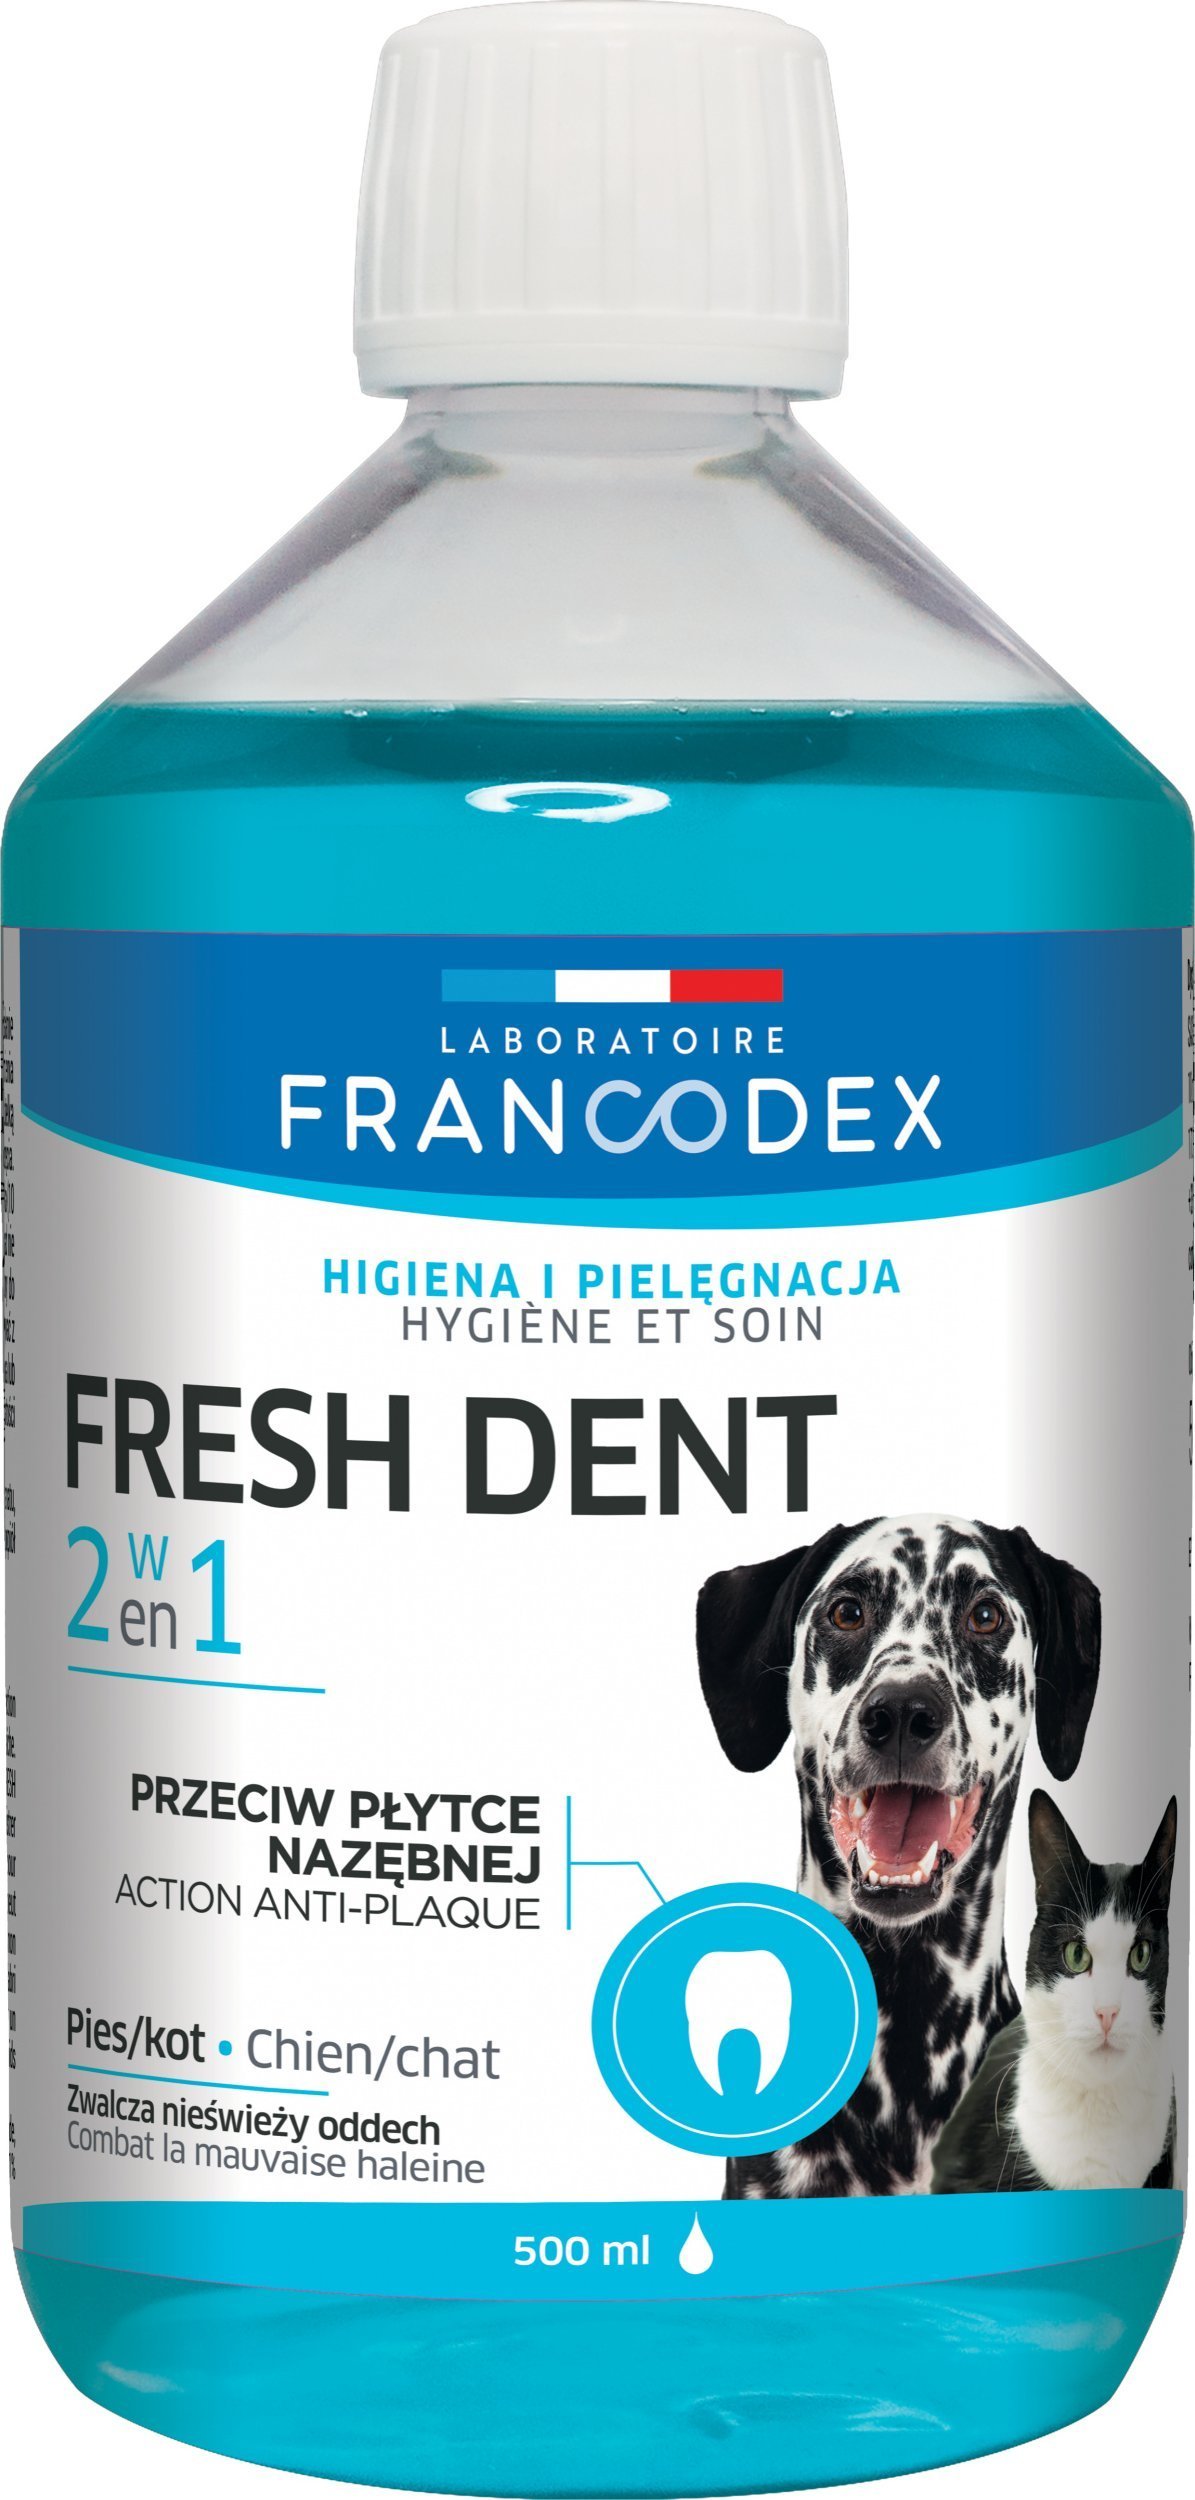 Solutie pentru igiena orala Francodex Fresh Dent, Extract de rodie, Potrivita pentru caini si pisici, 500 ml